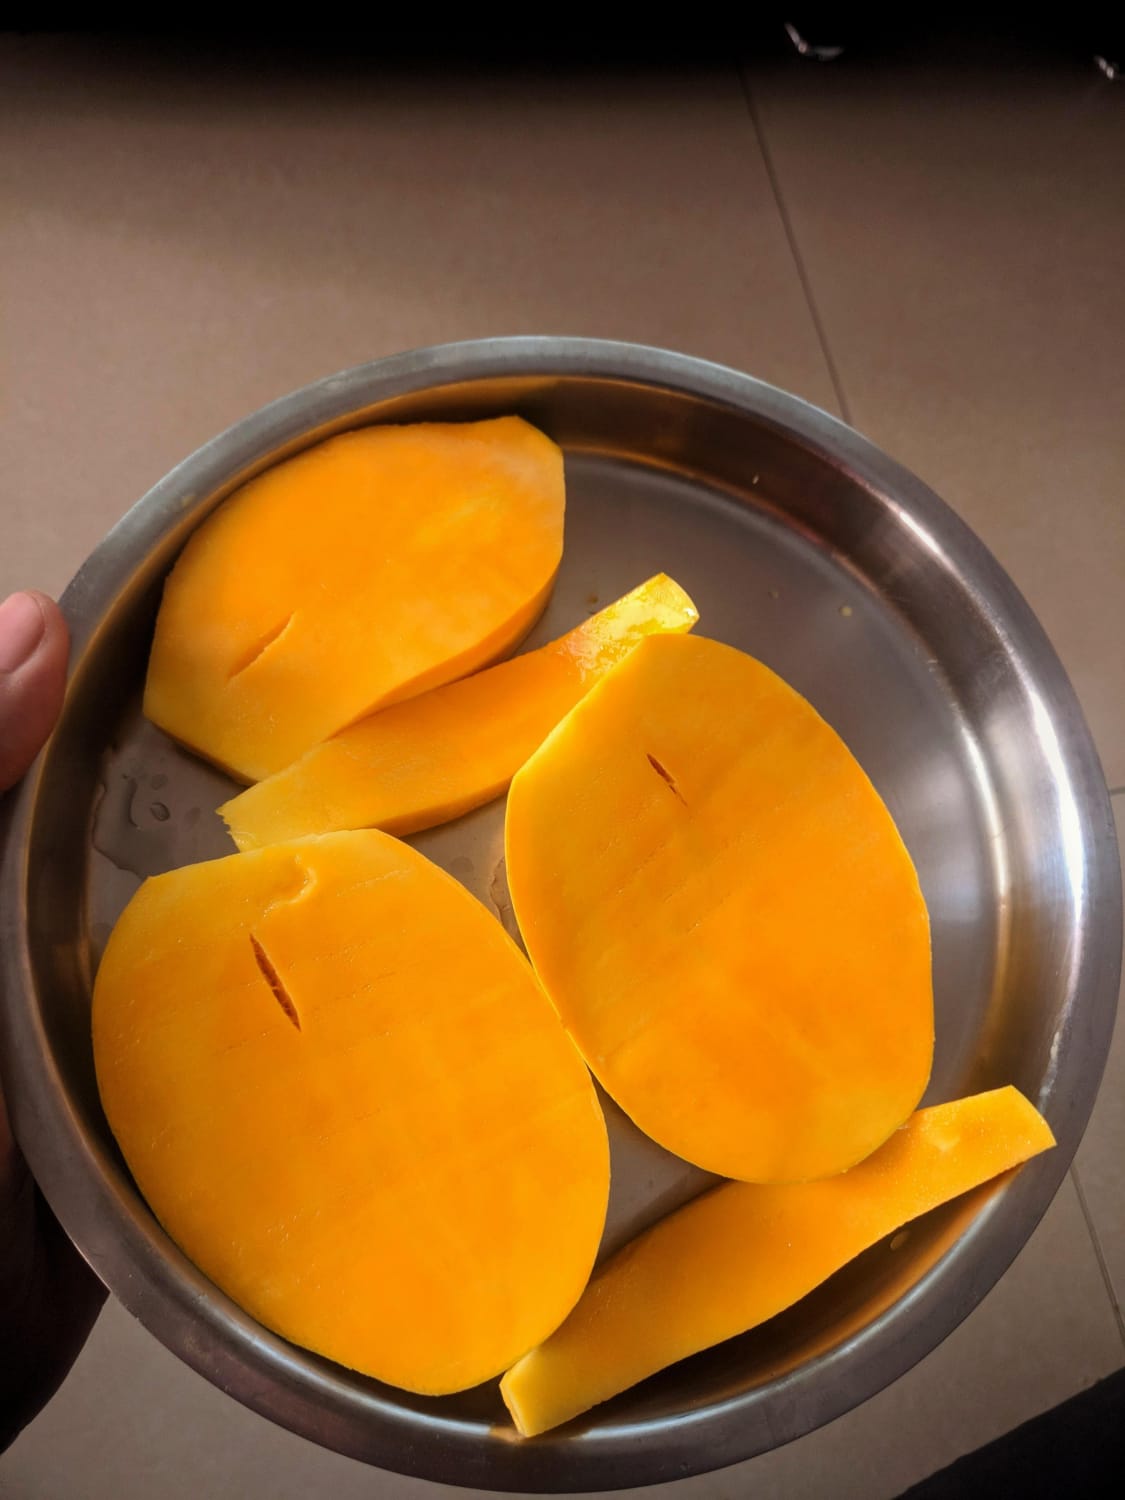 Mangoes from my backyard